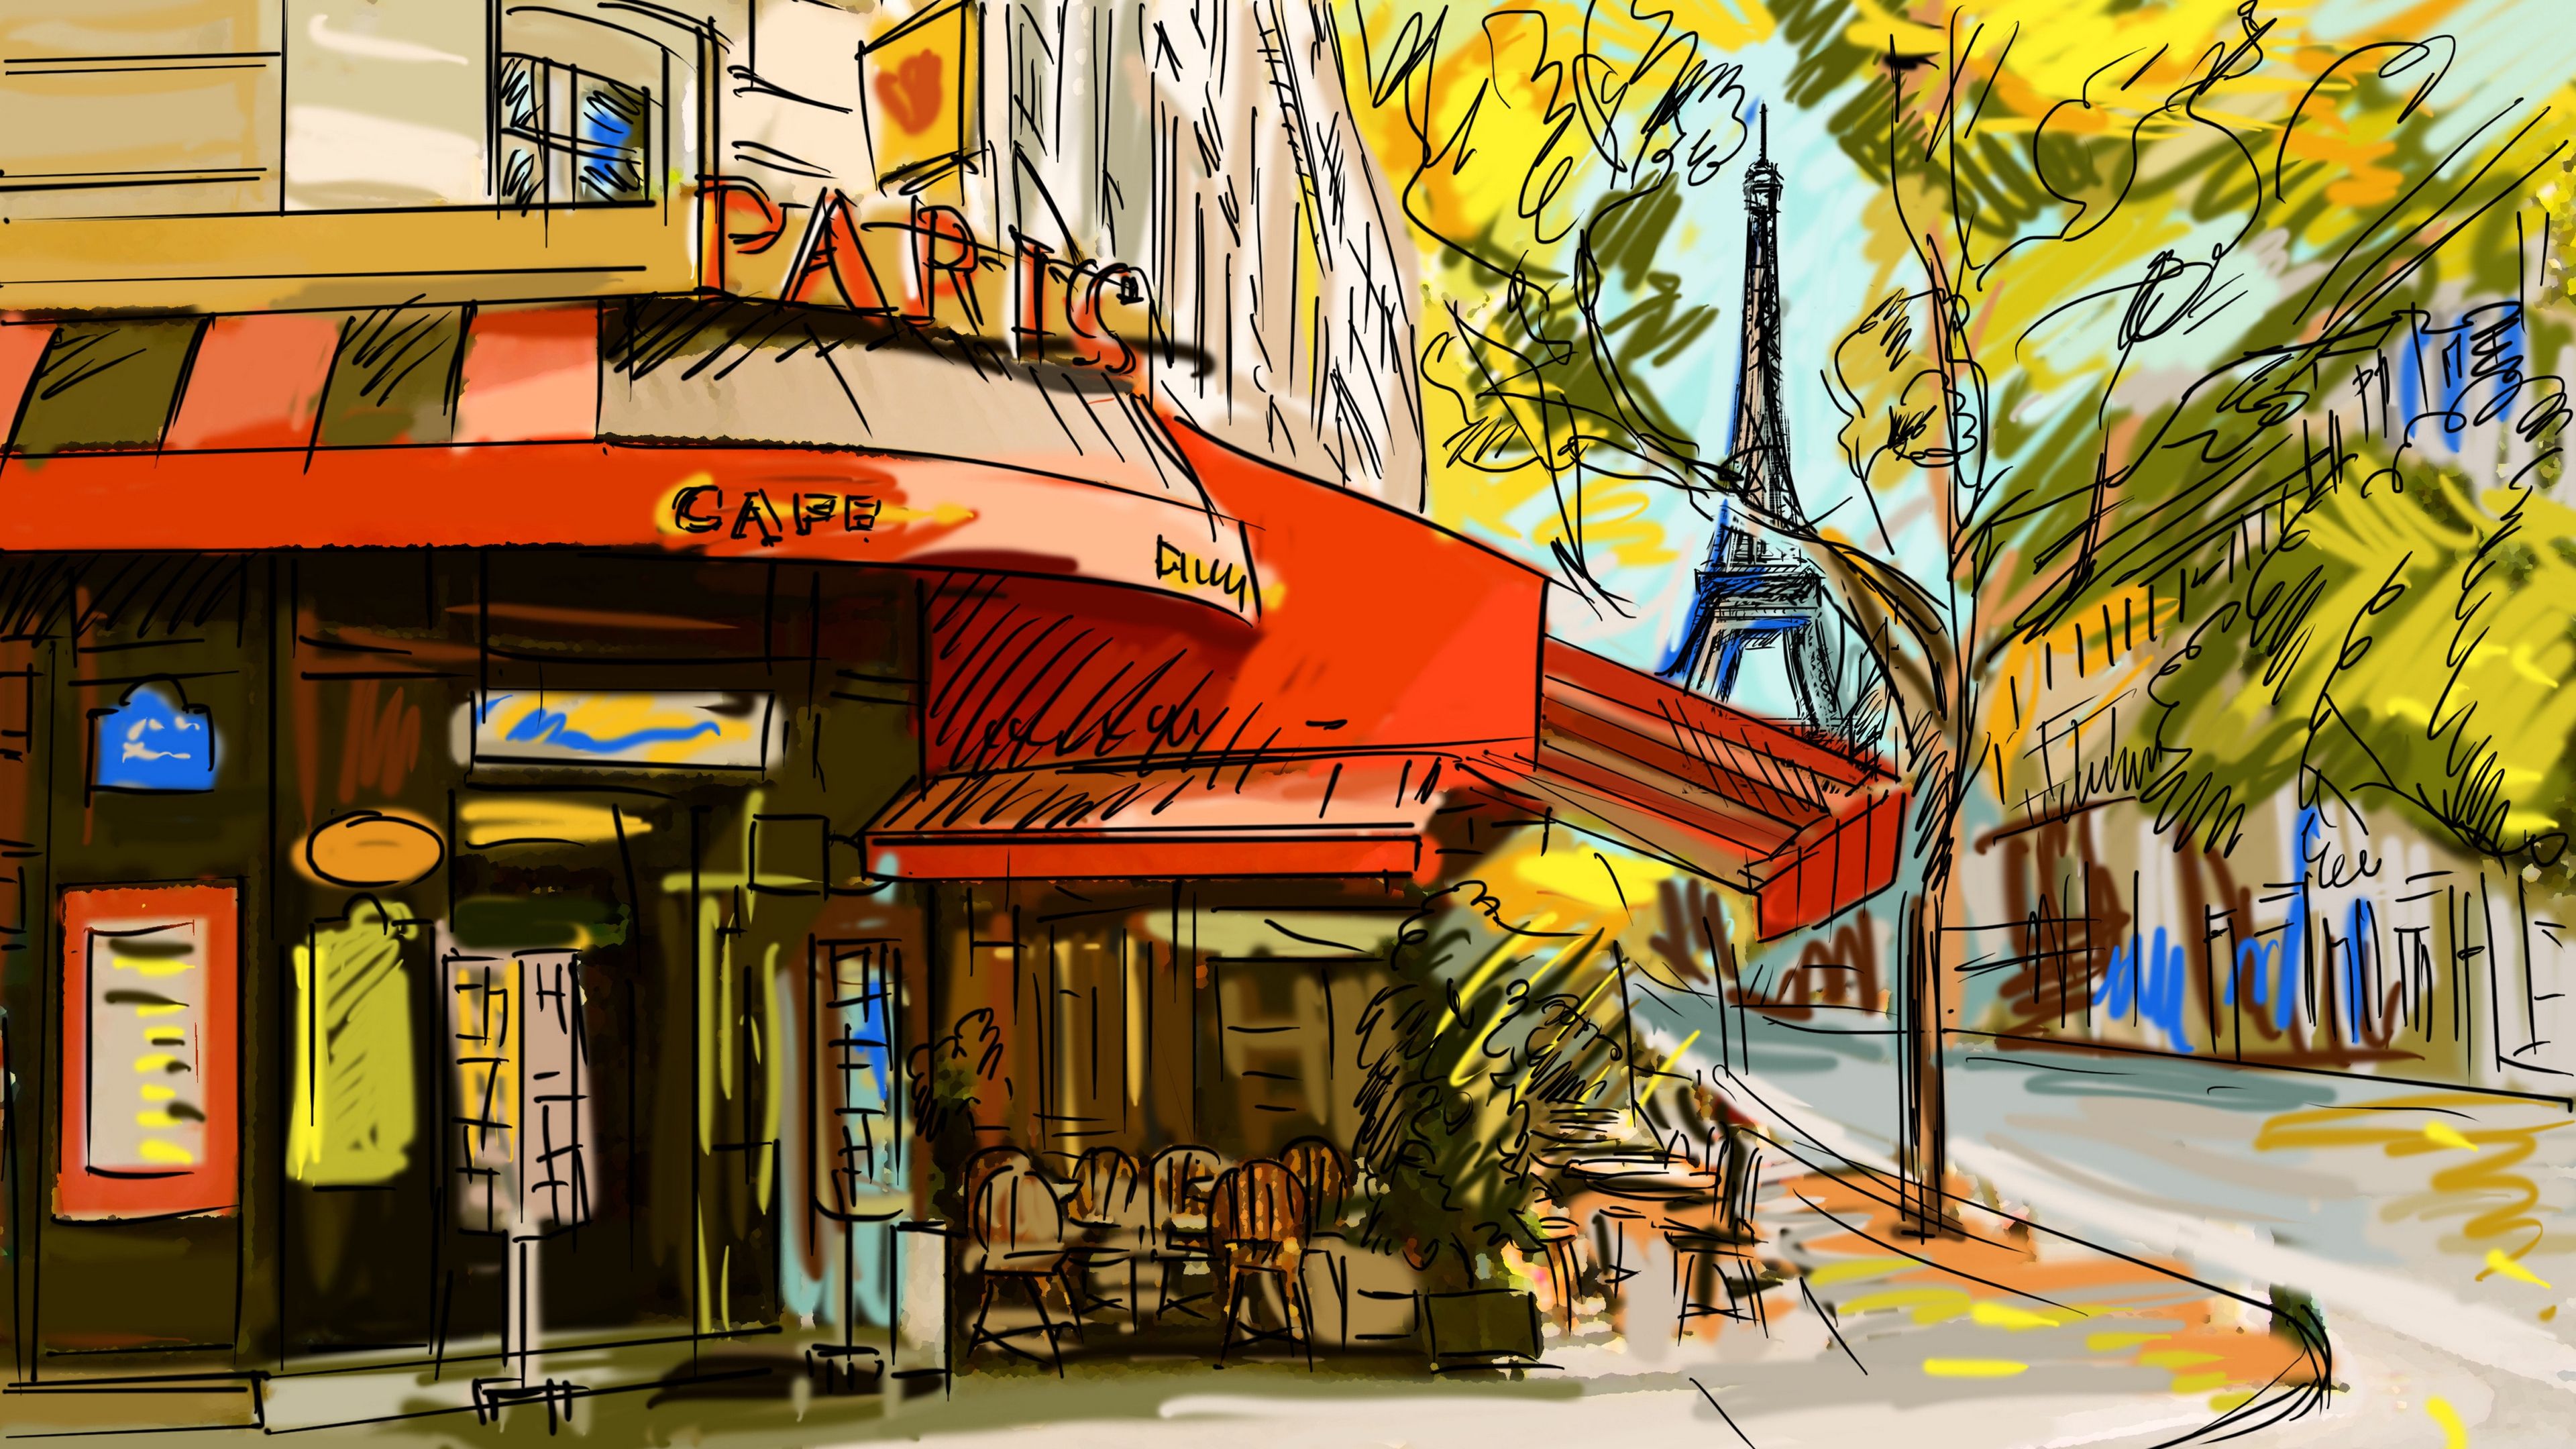 Wallpaper 4k france, cafe, picture, paris 4k Cafe, France, picture